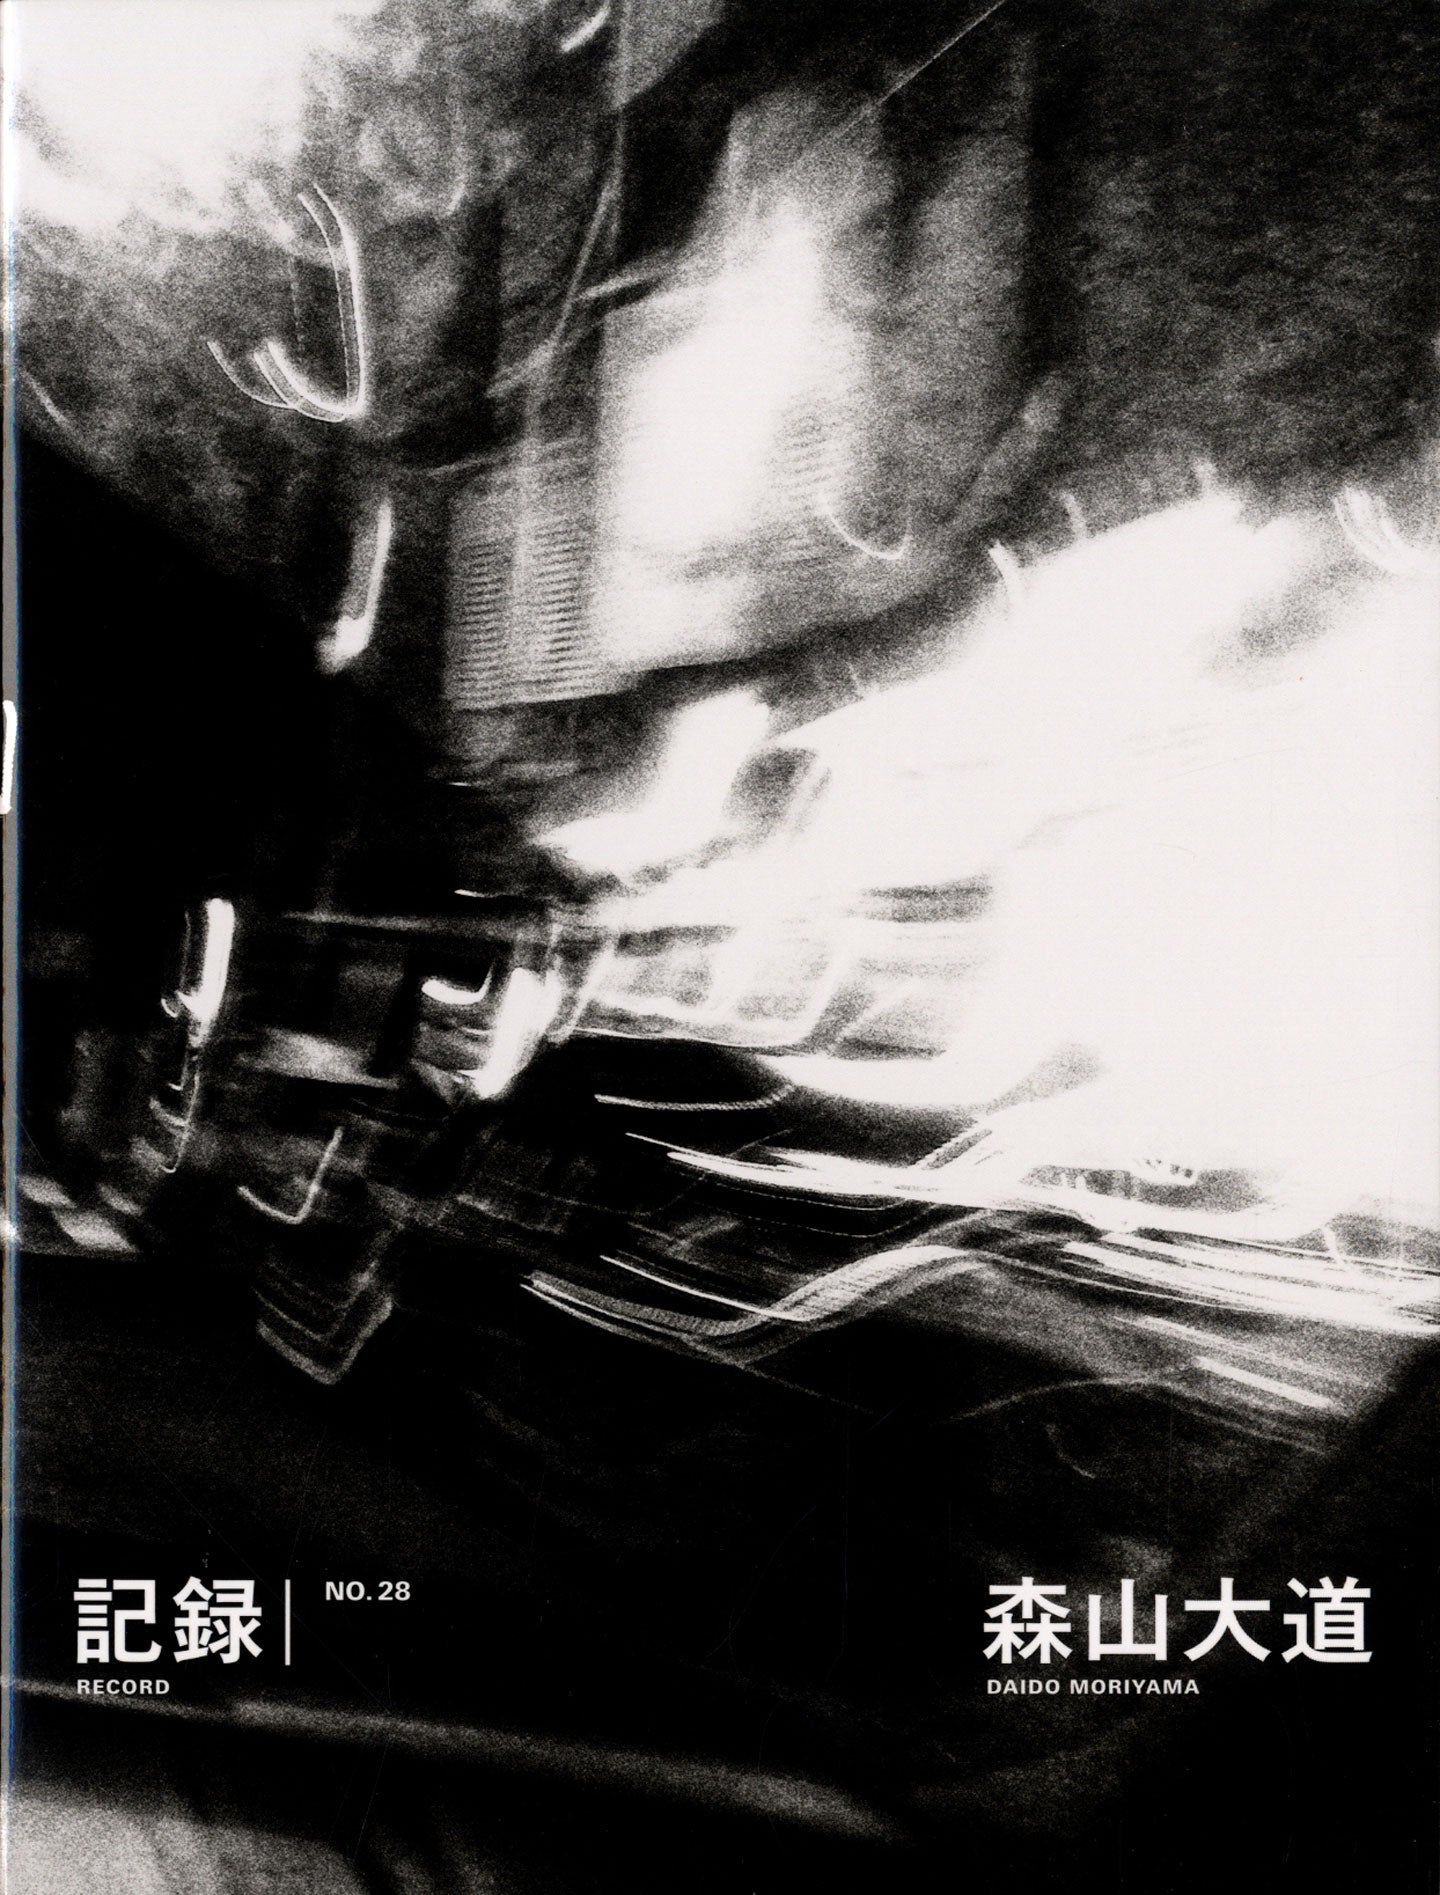 Daido Moriyama: Record Nos. 1-50 / Kiroku, Nos. 1-50, Complete Set (Includes Reprinted Edition of Nos. 1-5 and No. 6 through No. 50); Daido Moriyama × Hajime Sawatari: Record Extra; Daido Moriyama: Record, Movie in London [ALL TITLES SIGNED]